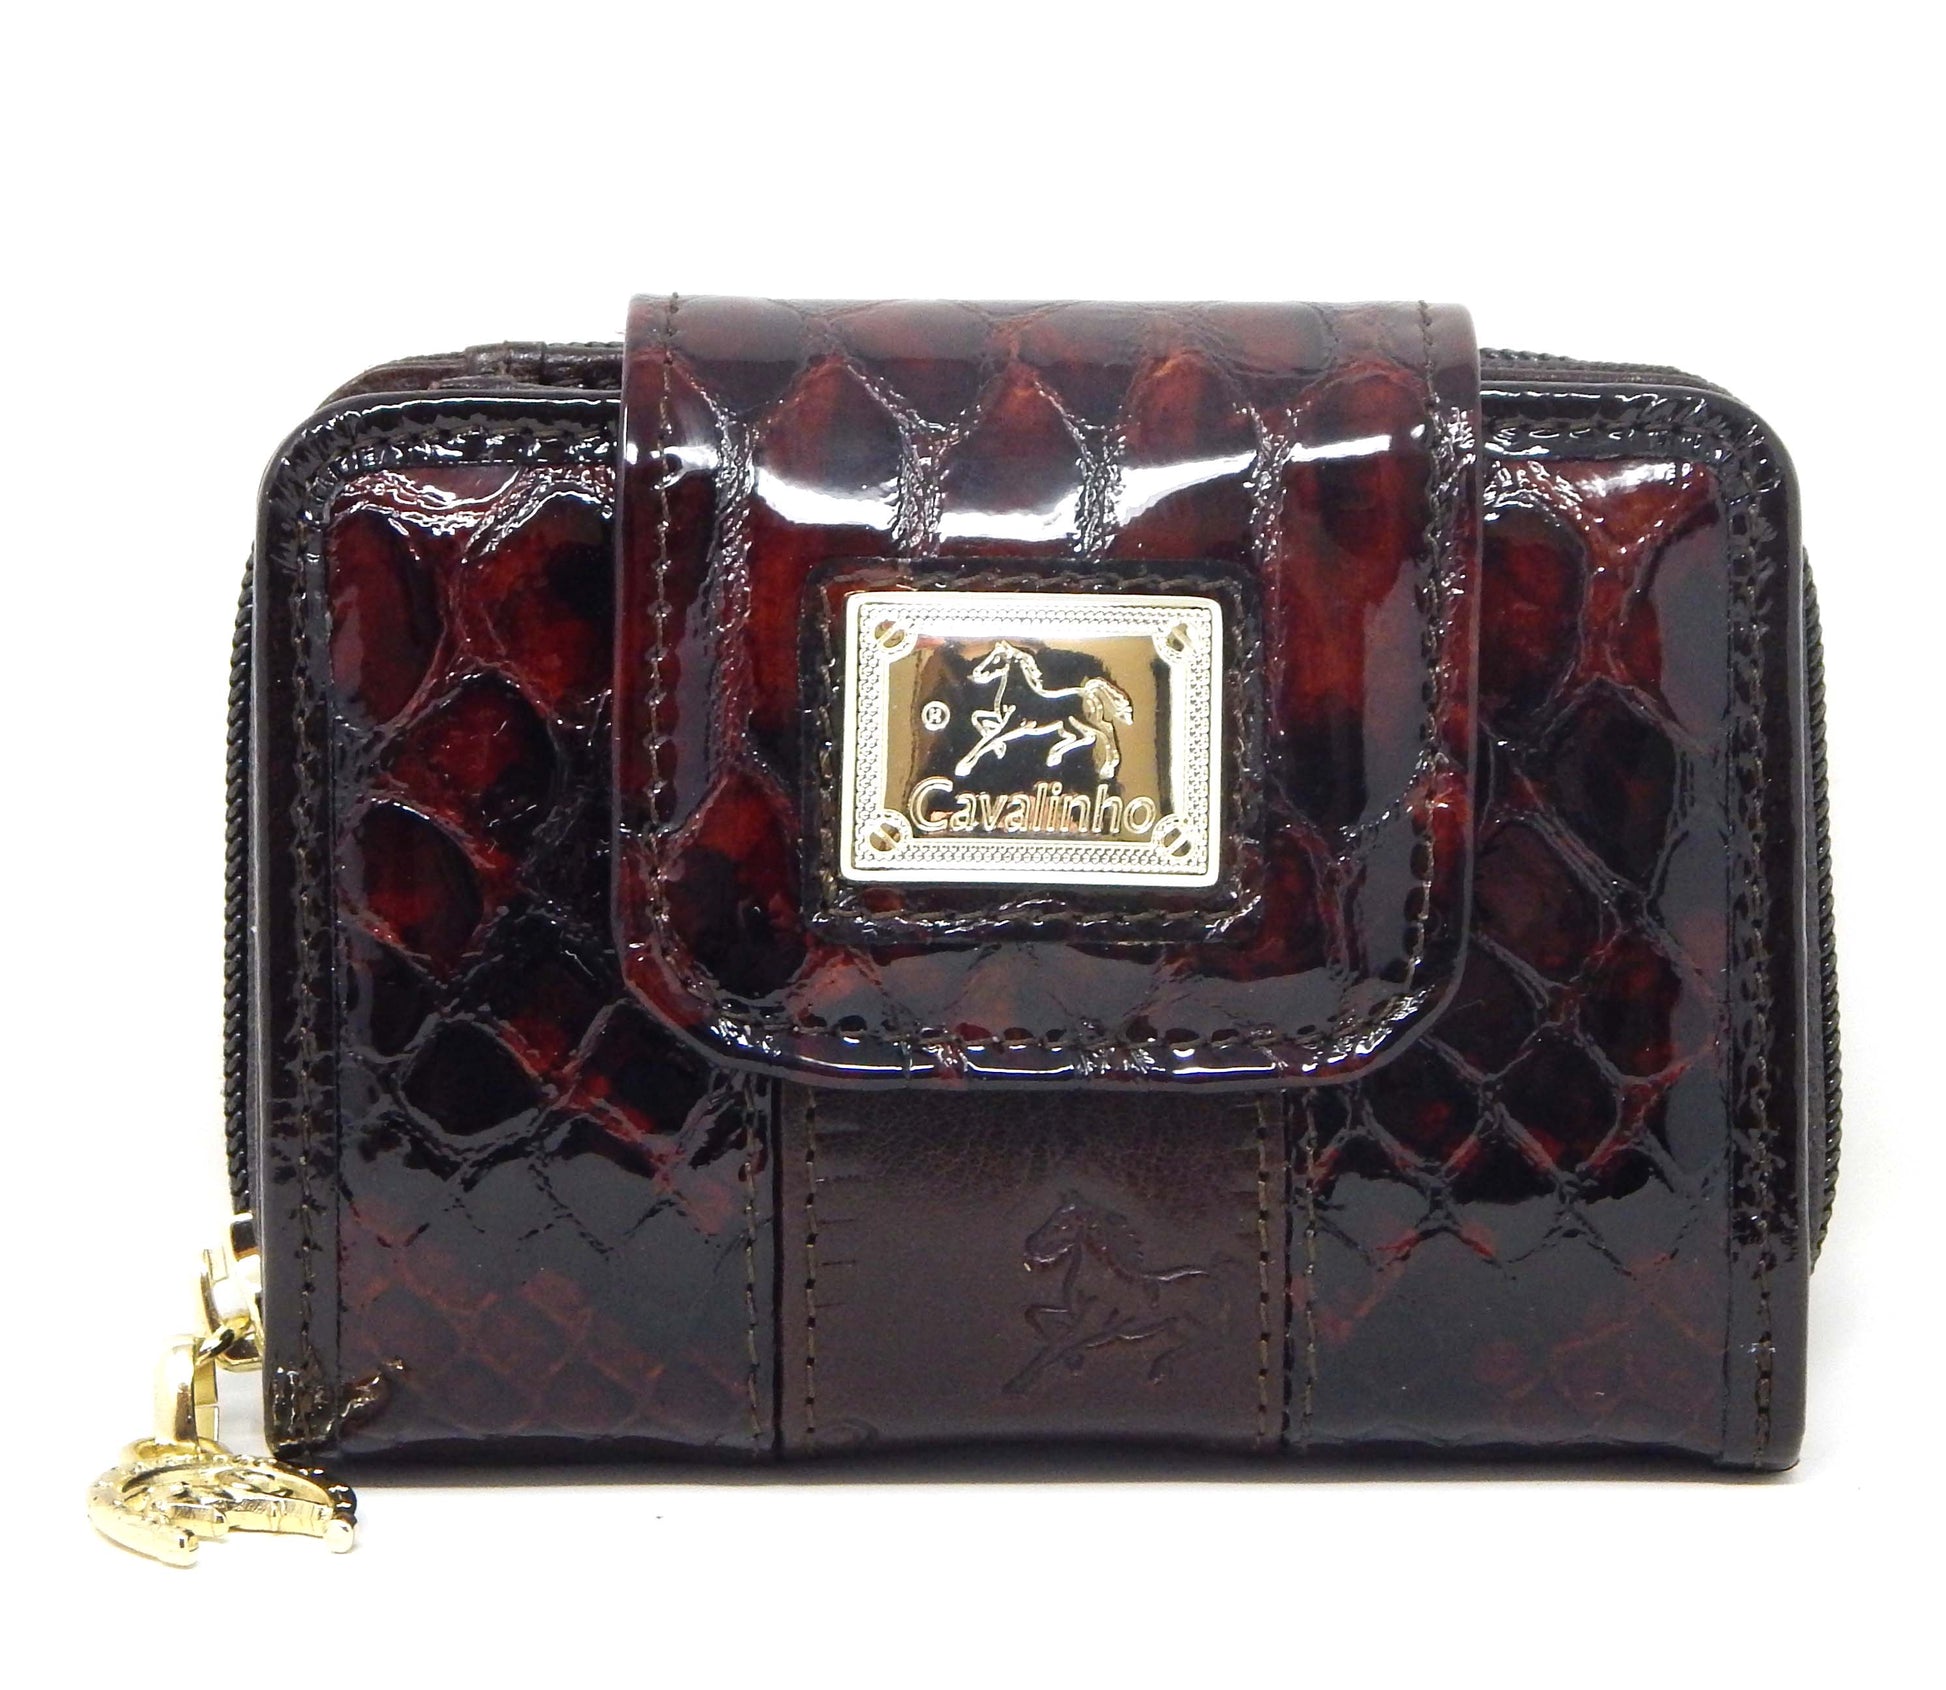 Cavalinho Honor Leather Wallet - Brown - 28190218.02.99_1